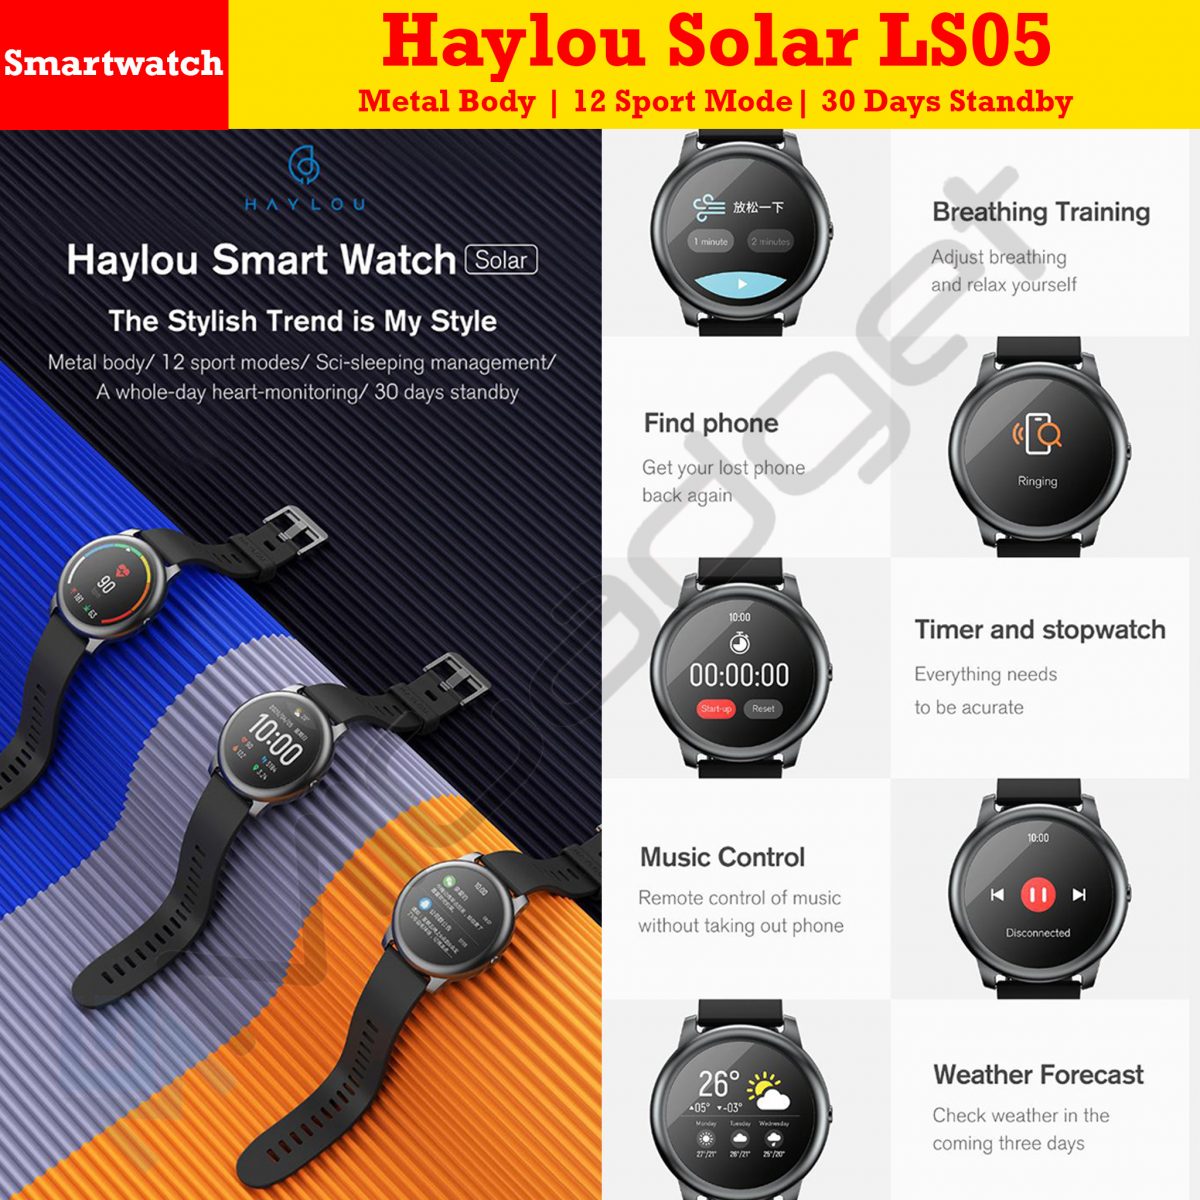 Haylou Solar LS05